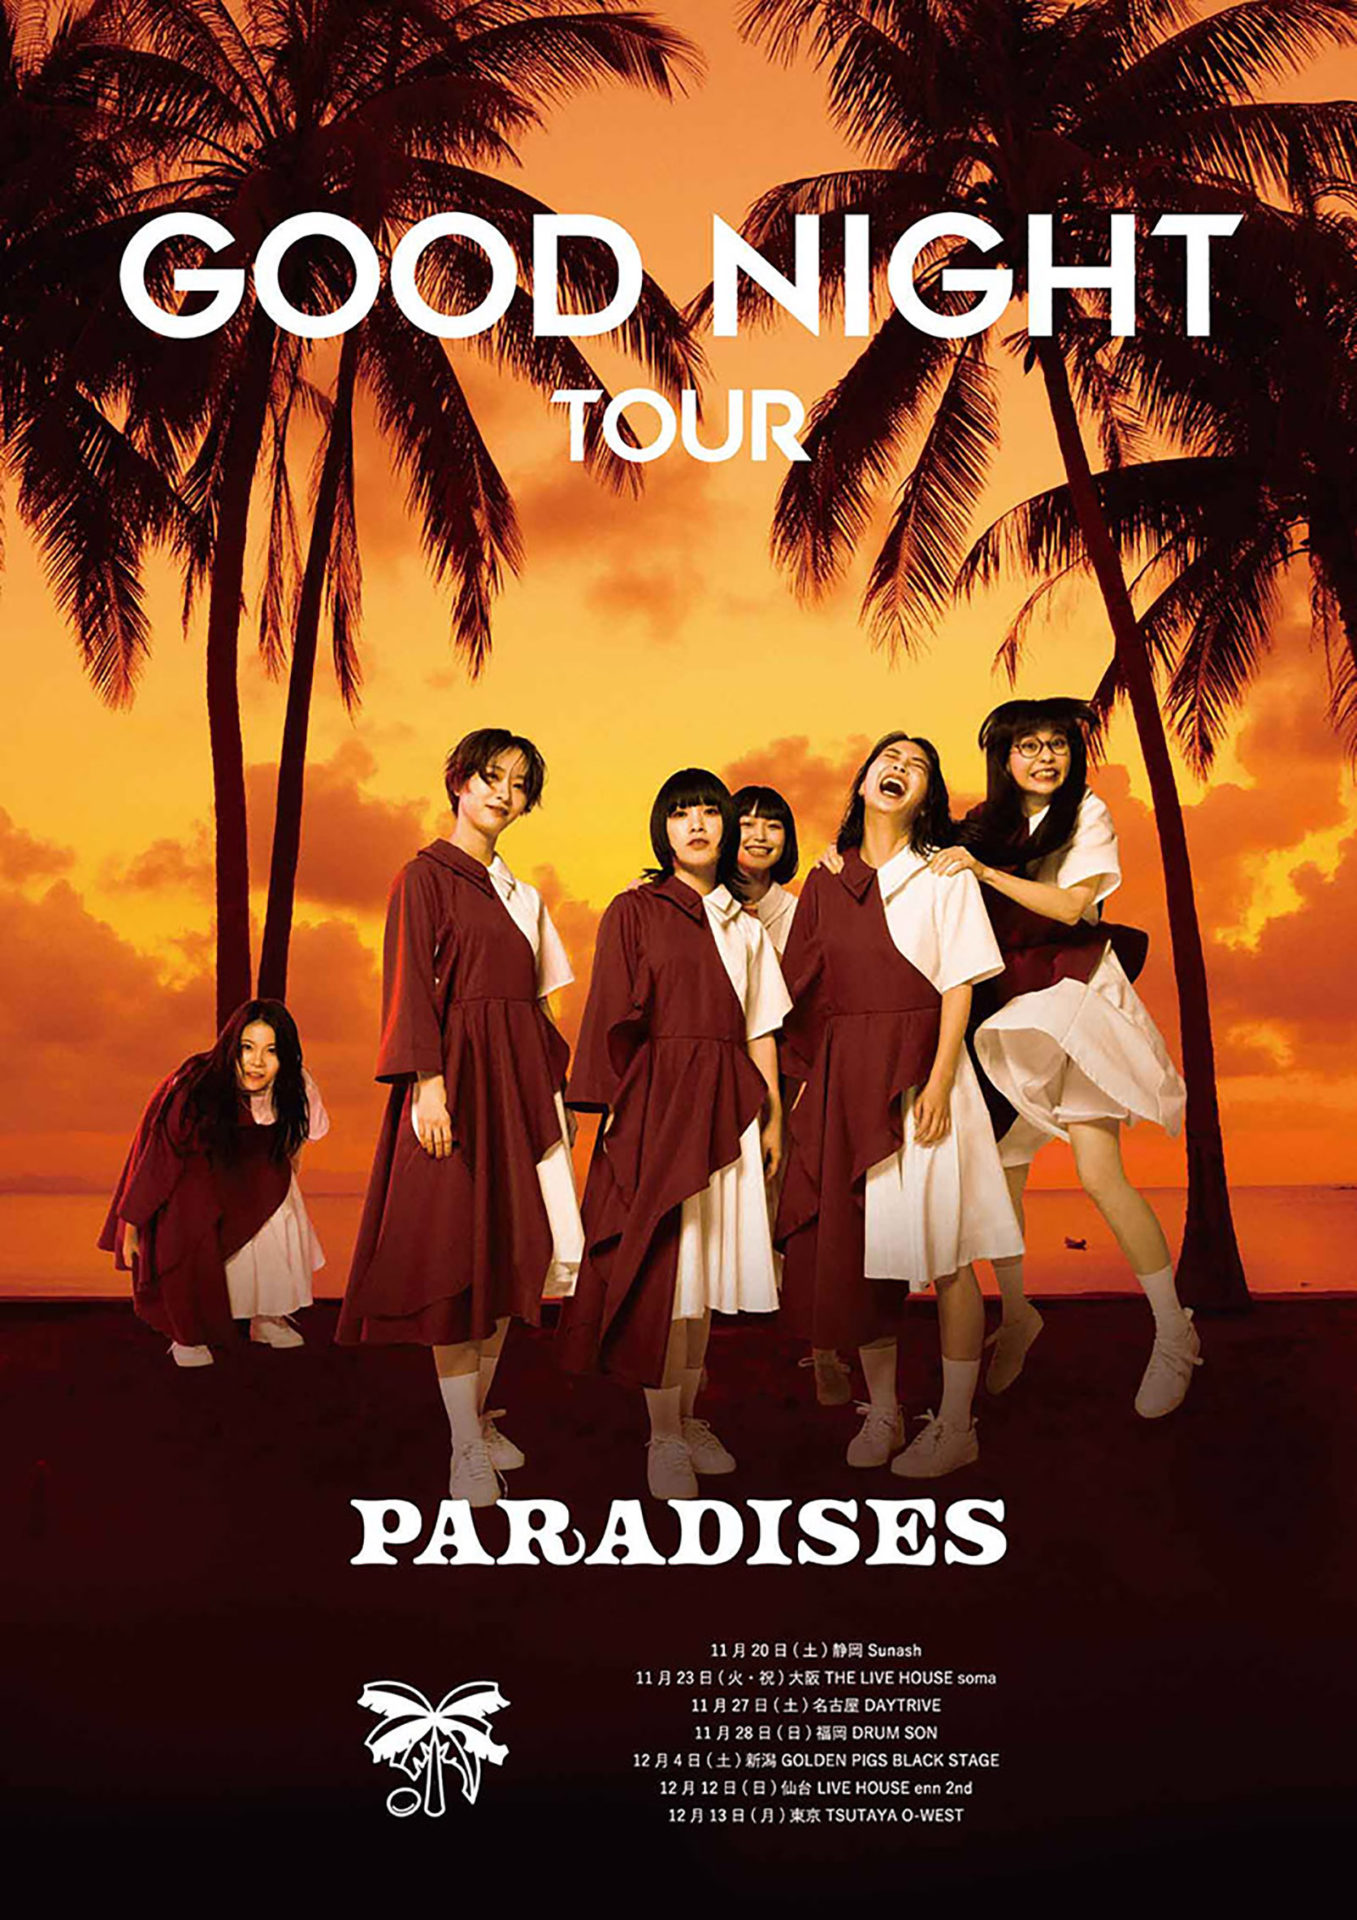 PARADISES GOOD NIGHT TOUR